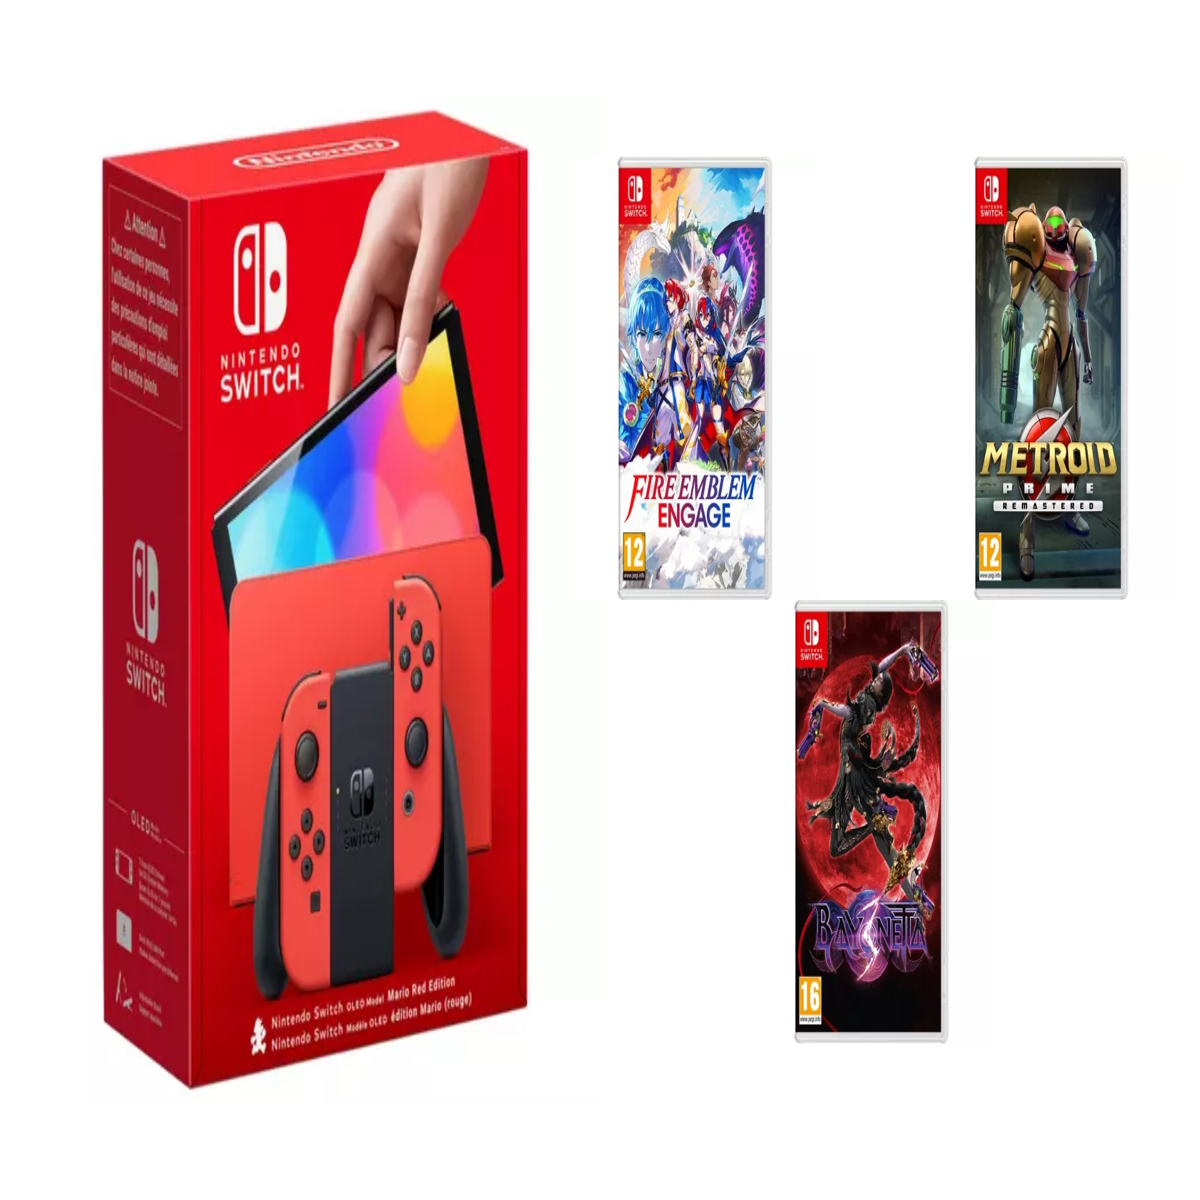 Nintendo Switch - OLED Model - Mario Red Edition Bundle